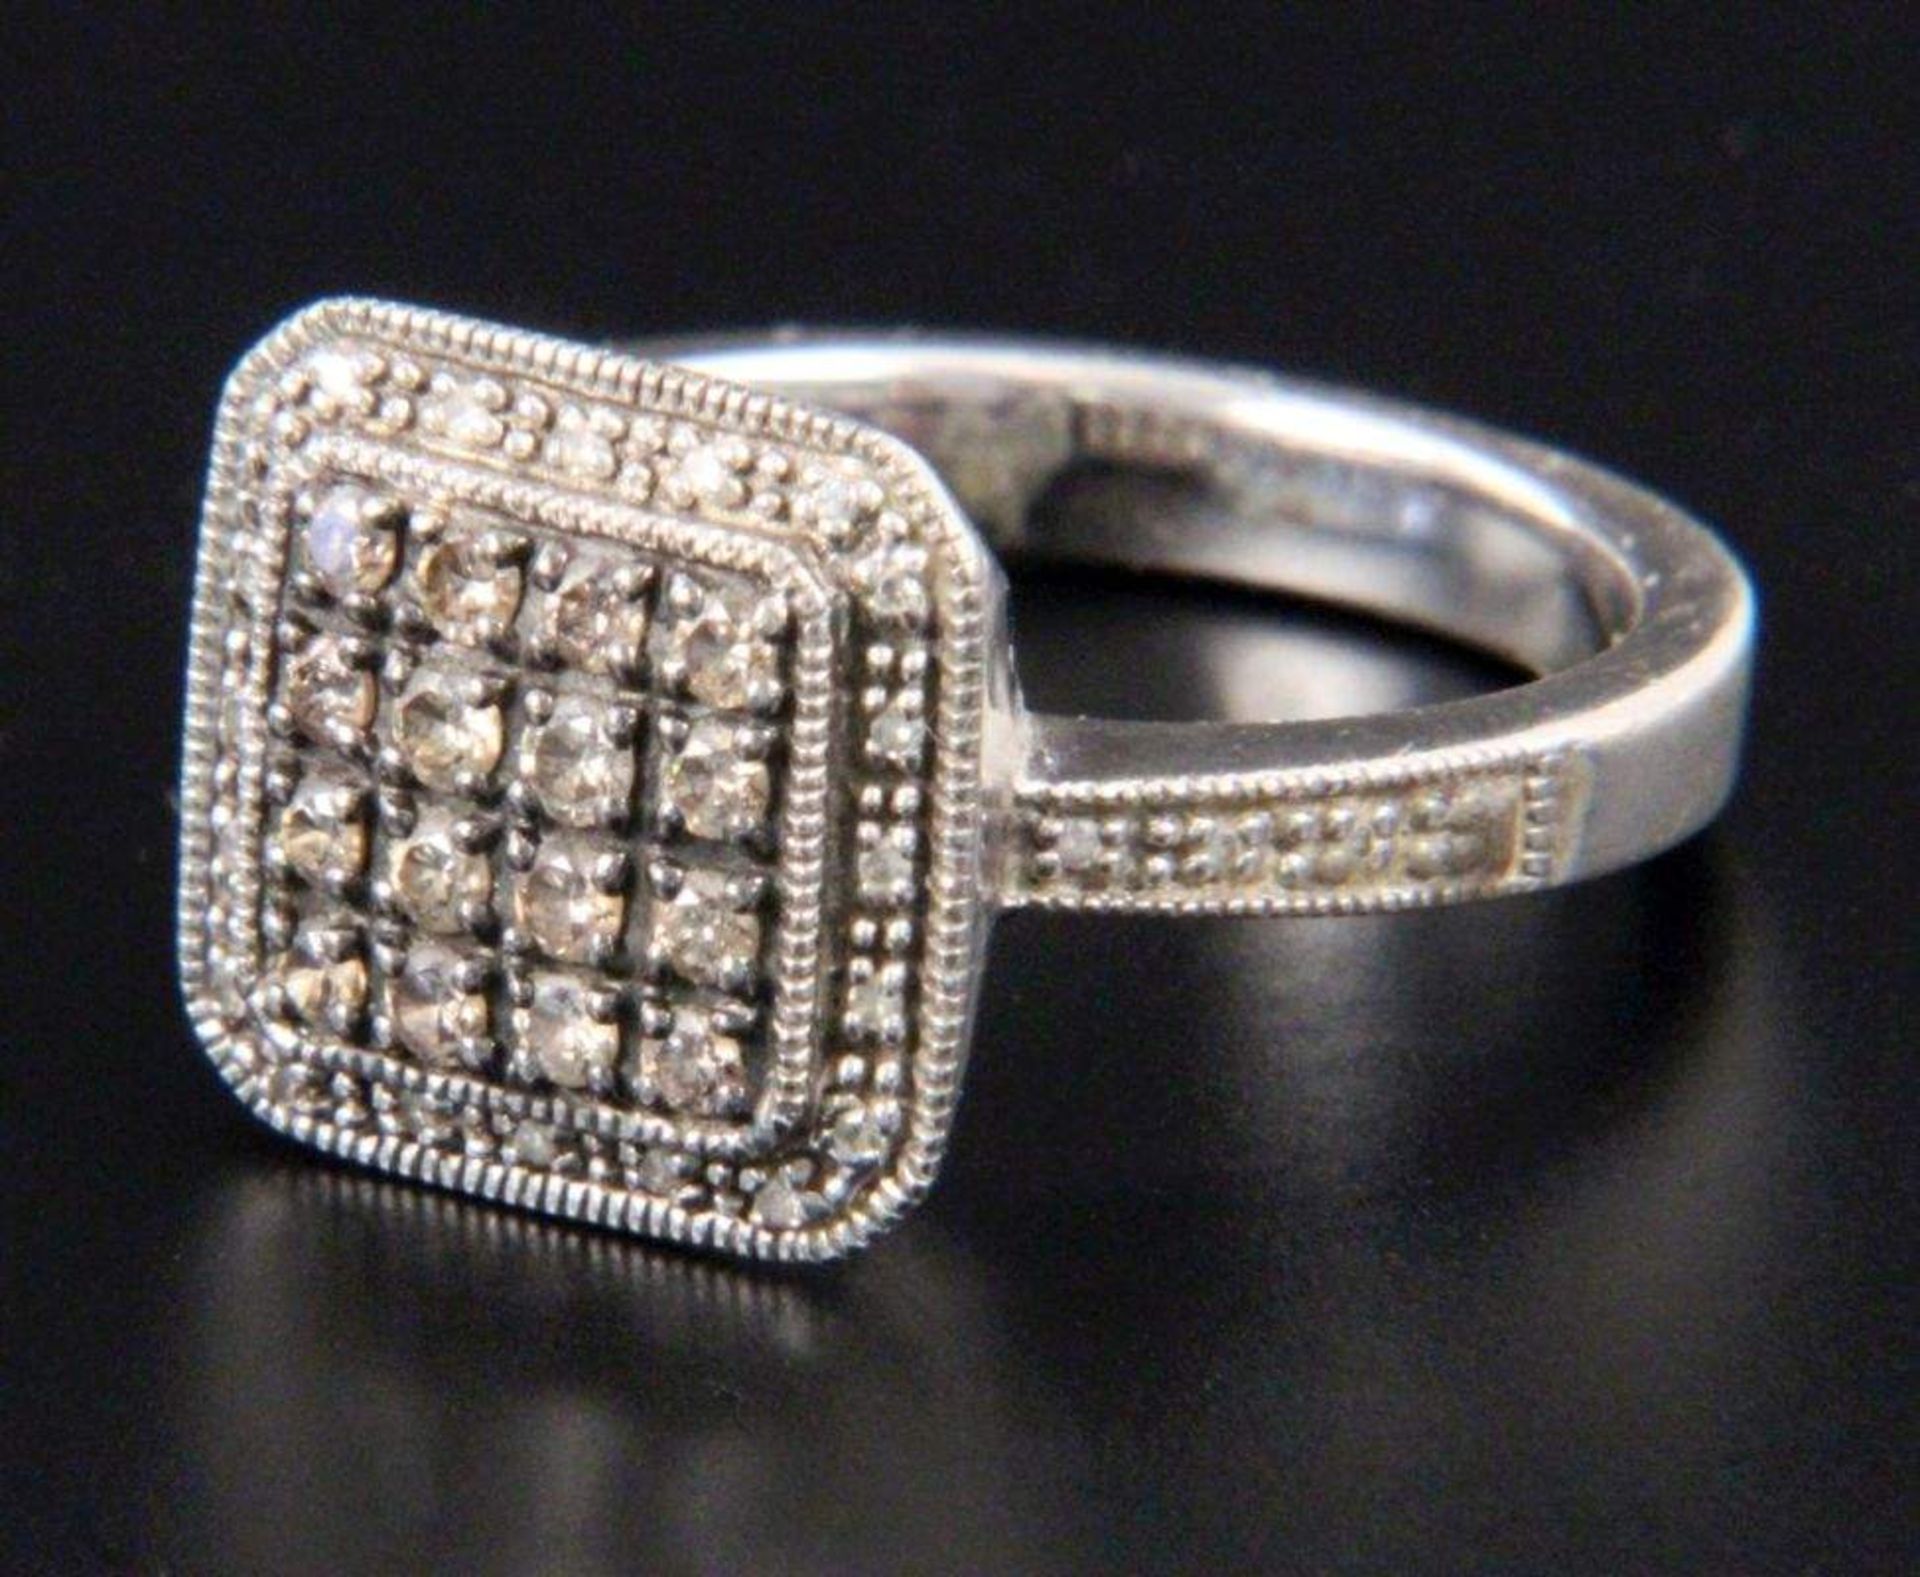 RING925/000 Silber mit Diamantbesatz. Ringmaß ca. 19mm, brutto ca. 6,4gAufrufpreis: 30 EUR

A